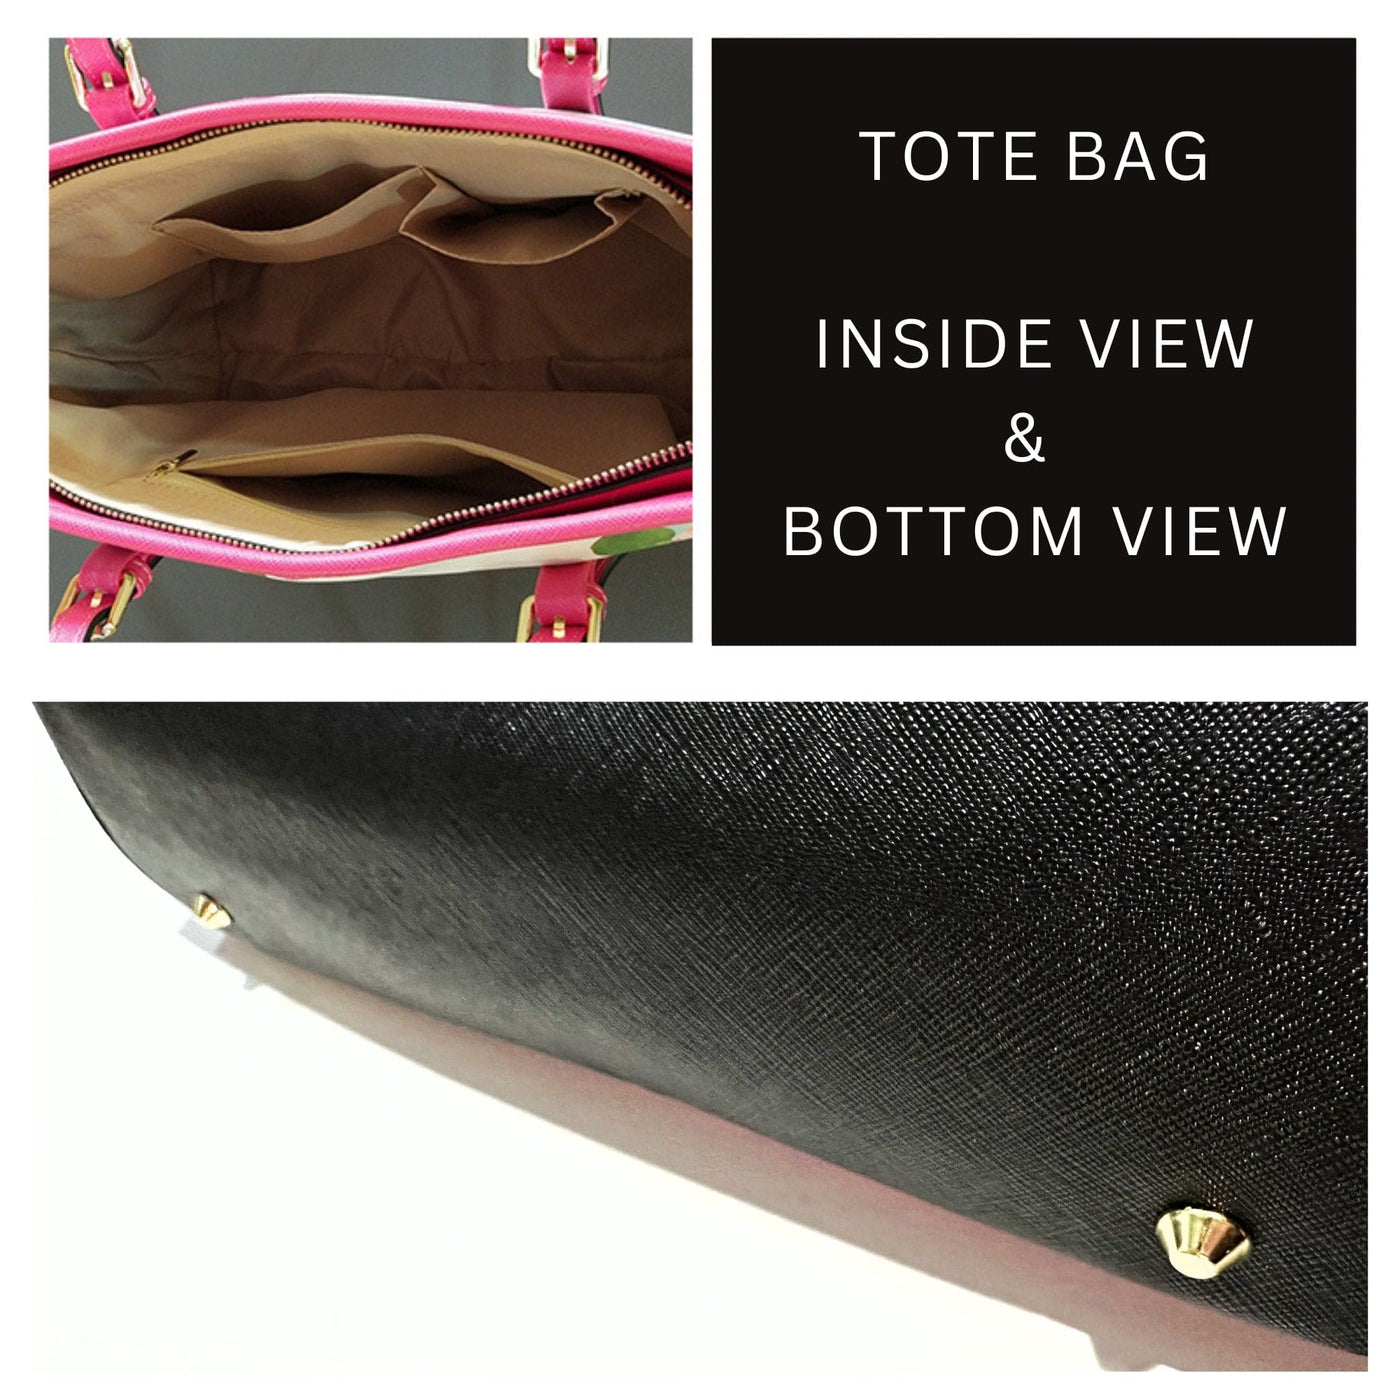 Large Leather Tote Shoulder Bag - Bohemian Pattern Illustration - Bags | Leather